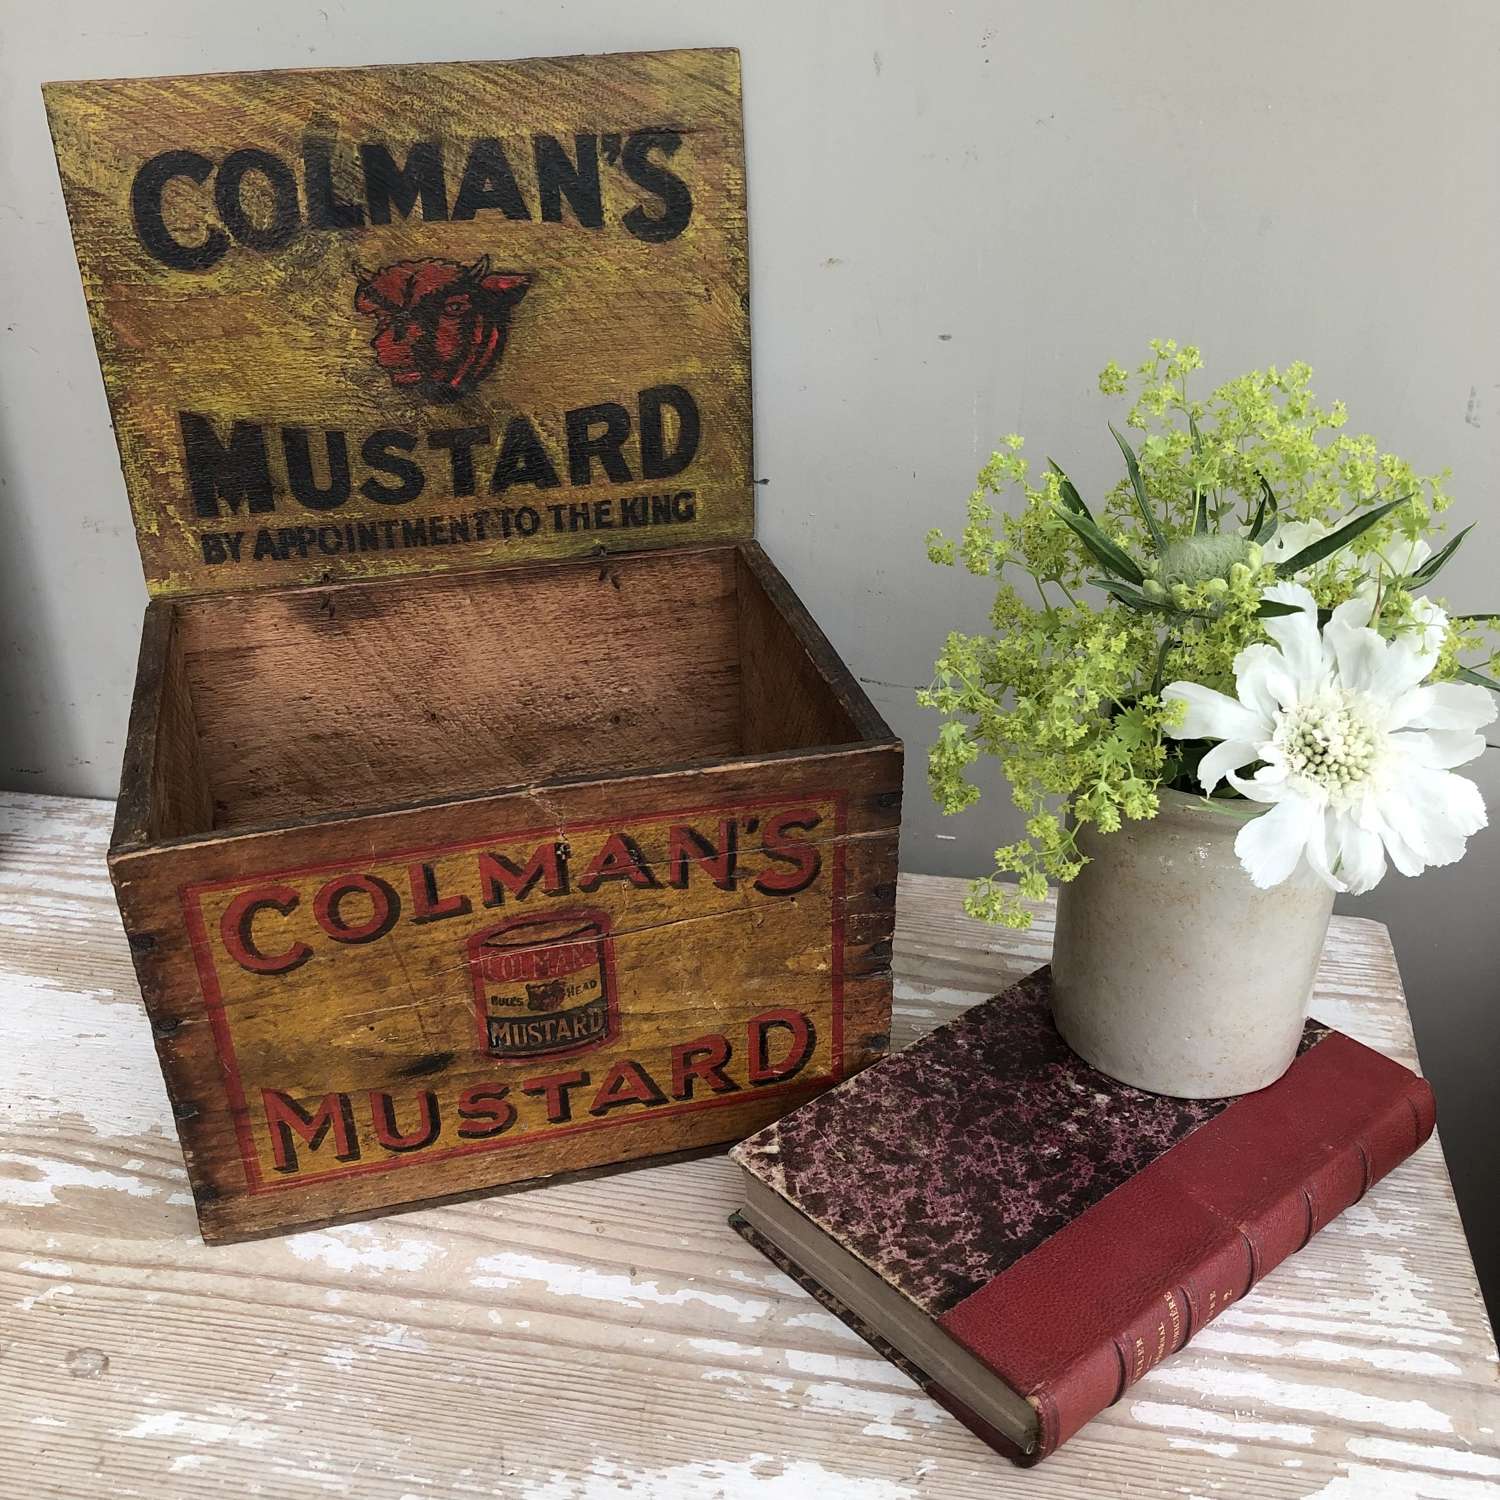 Colmans Mustard Box